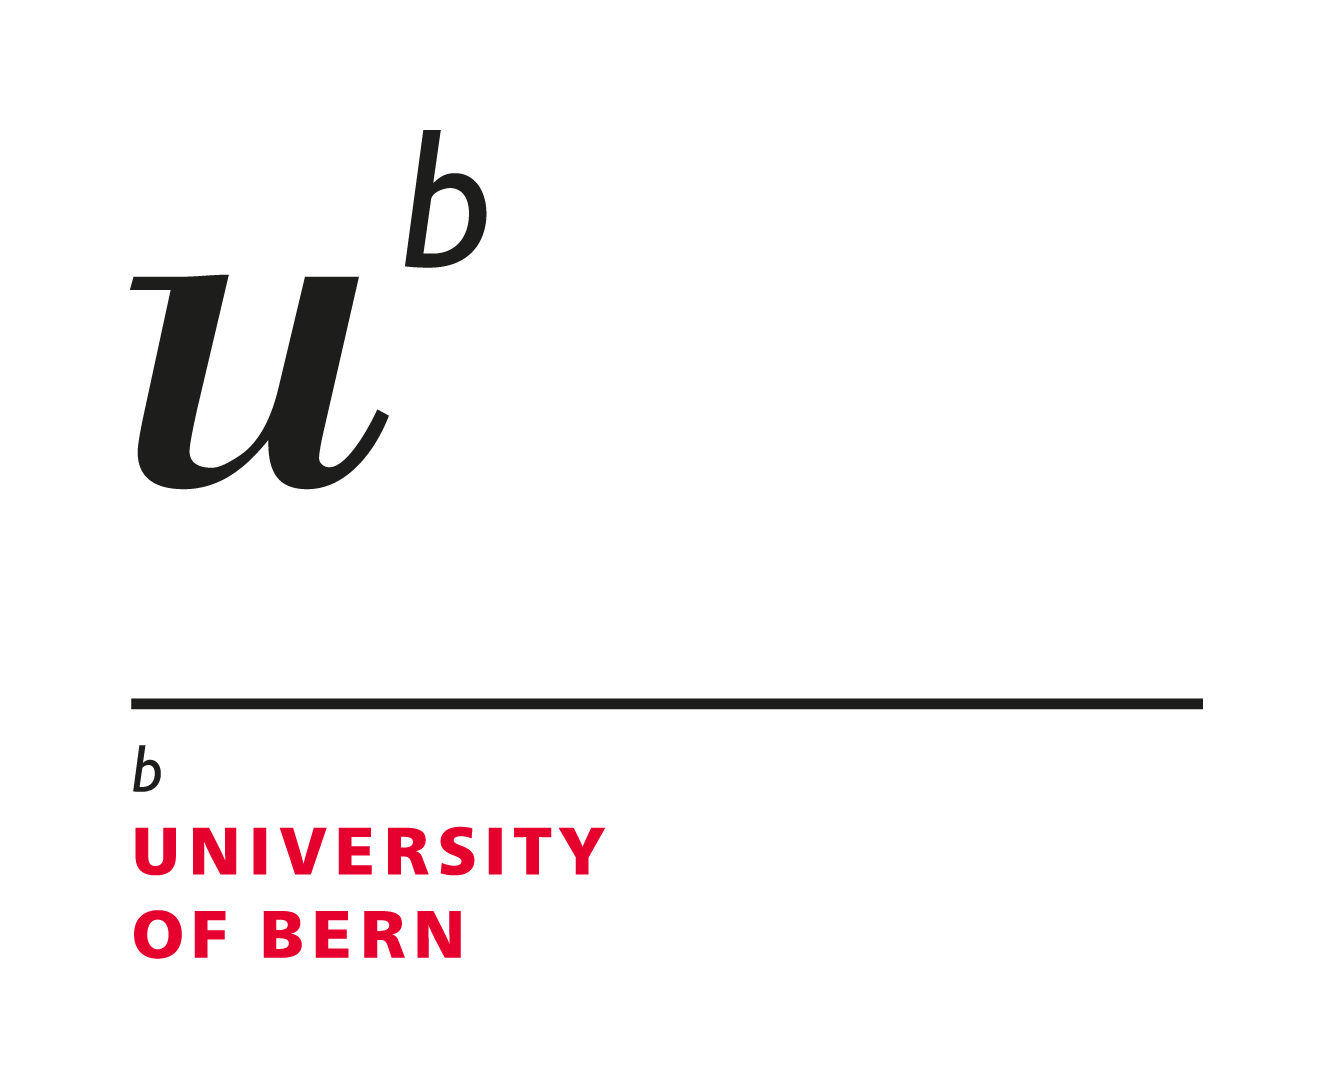 University Bern